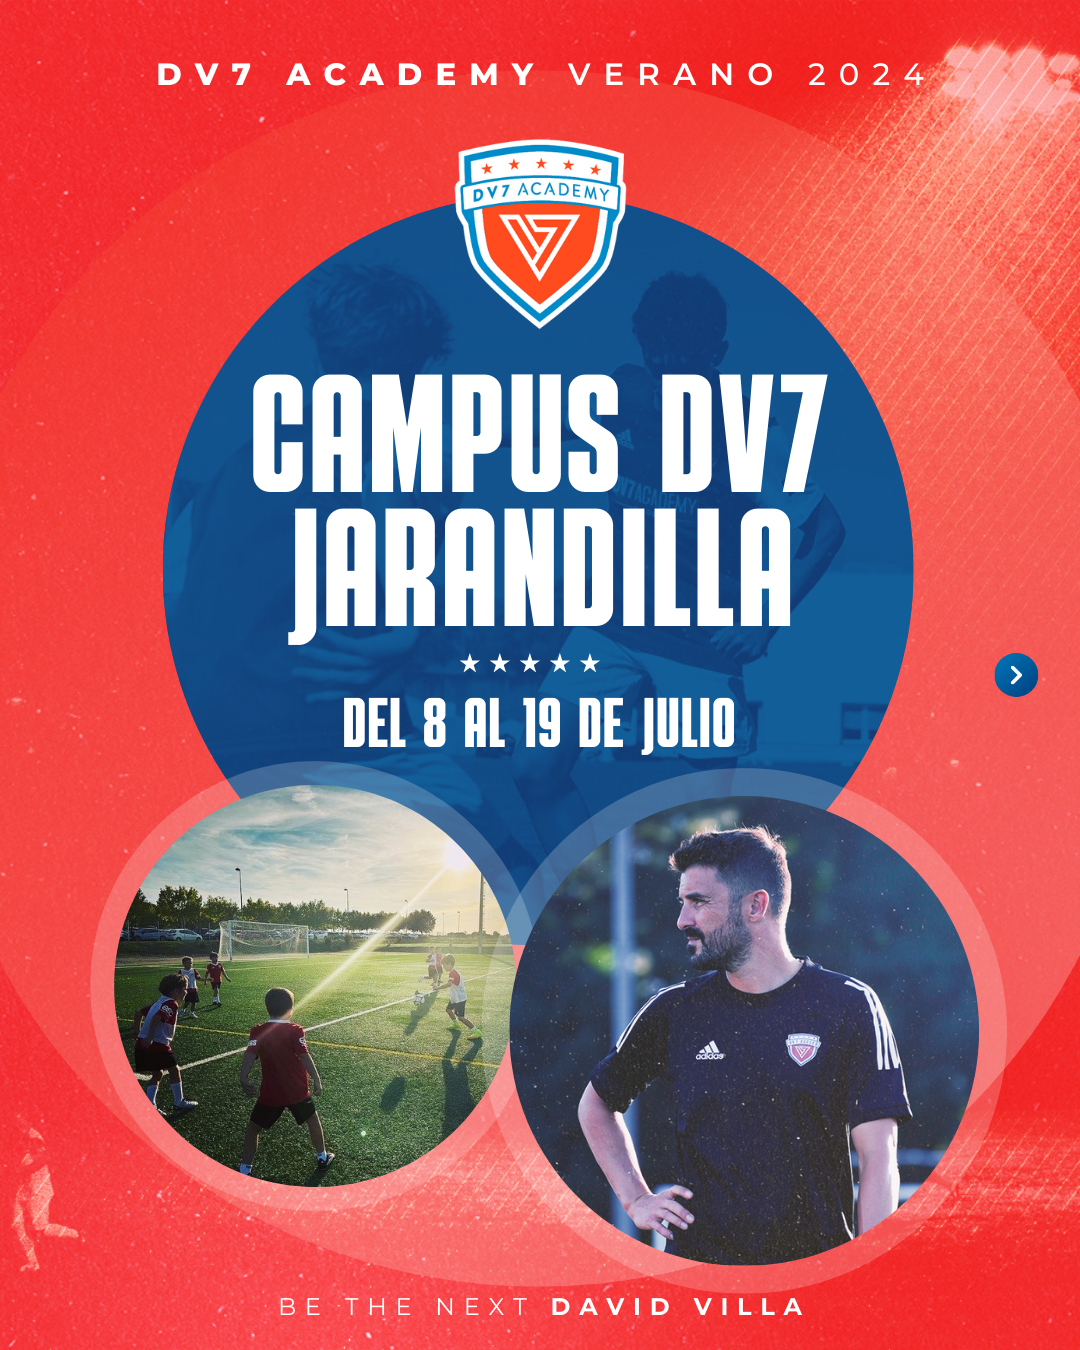 Campus DV7 Jarandilla_2024_Post-1